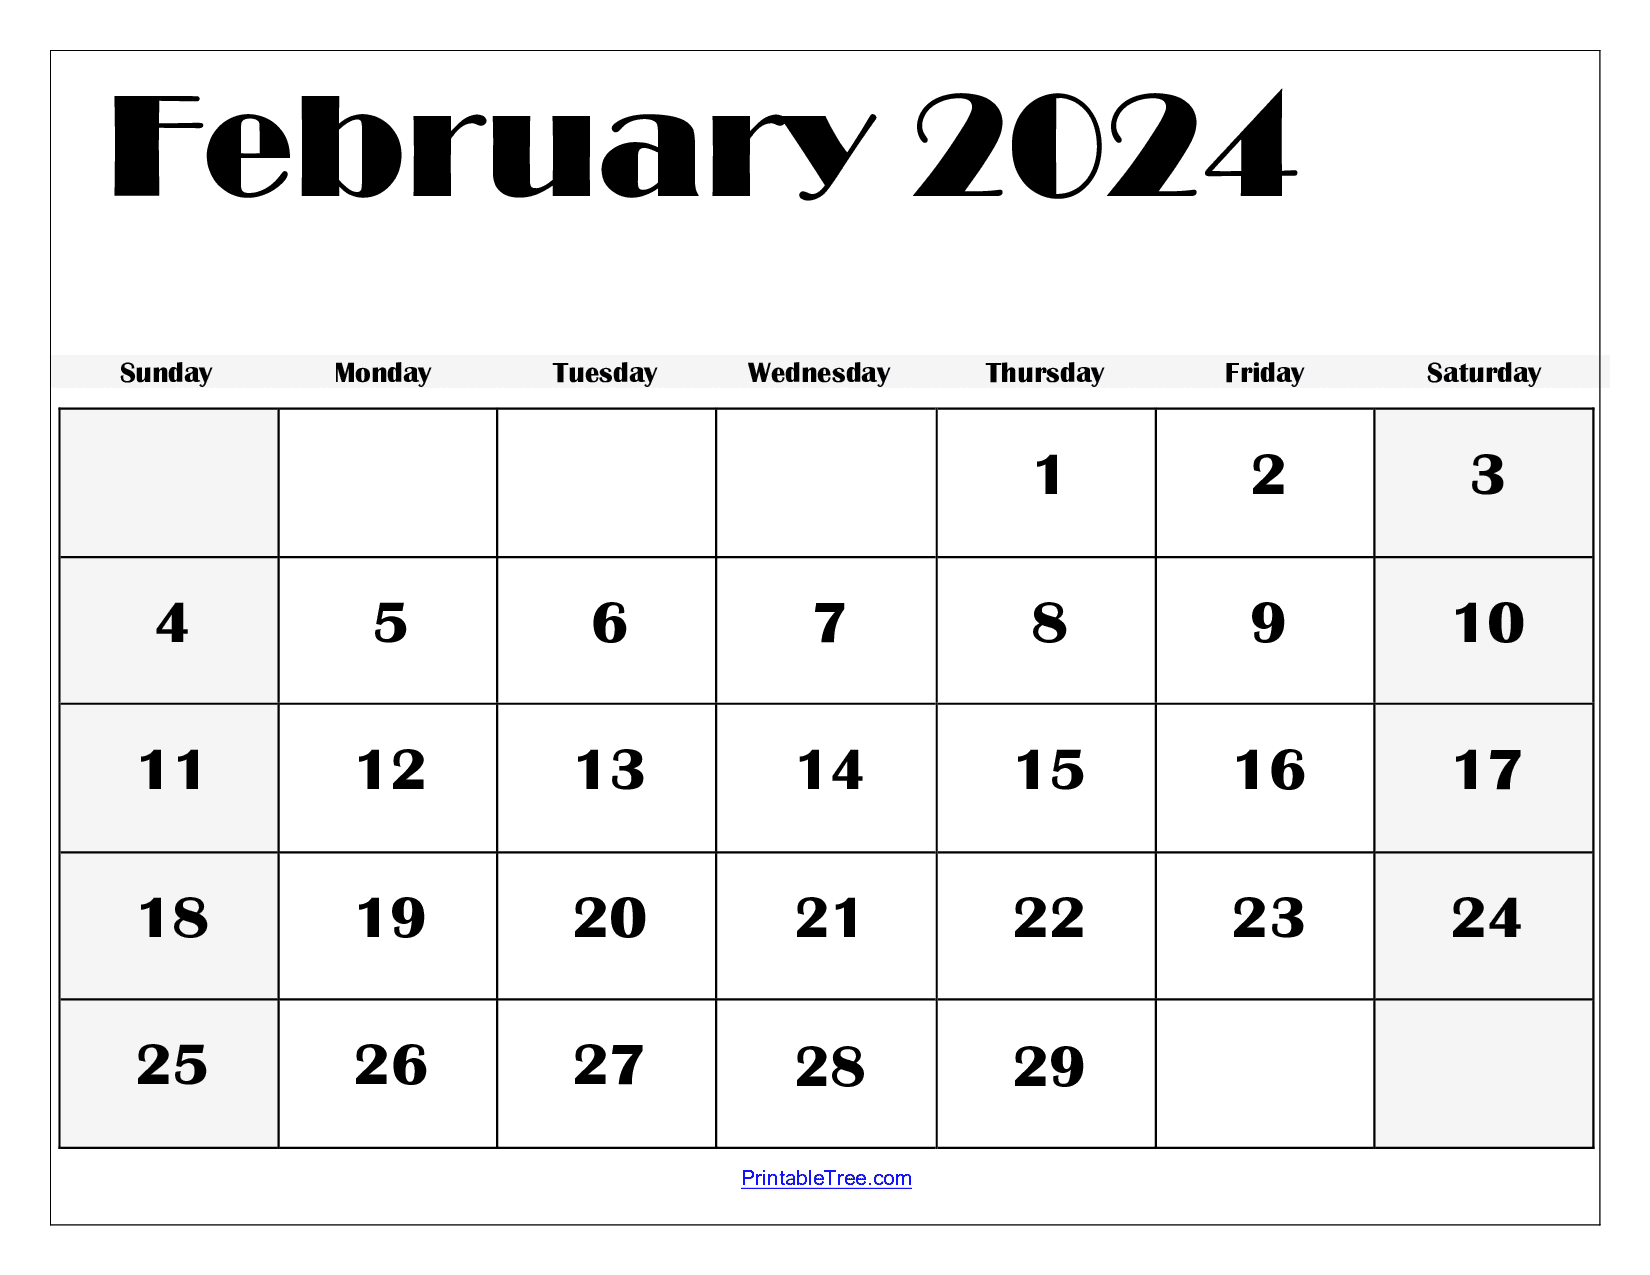 February 2024 Calendar Printable Pdf Template With Holidays for Blank Calendar February 2024 Printable